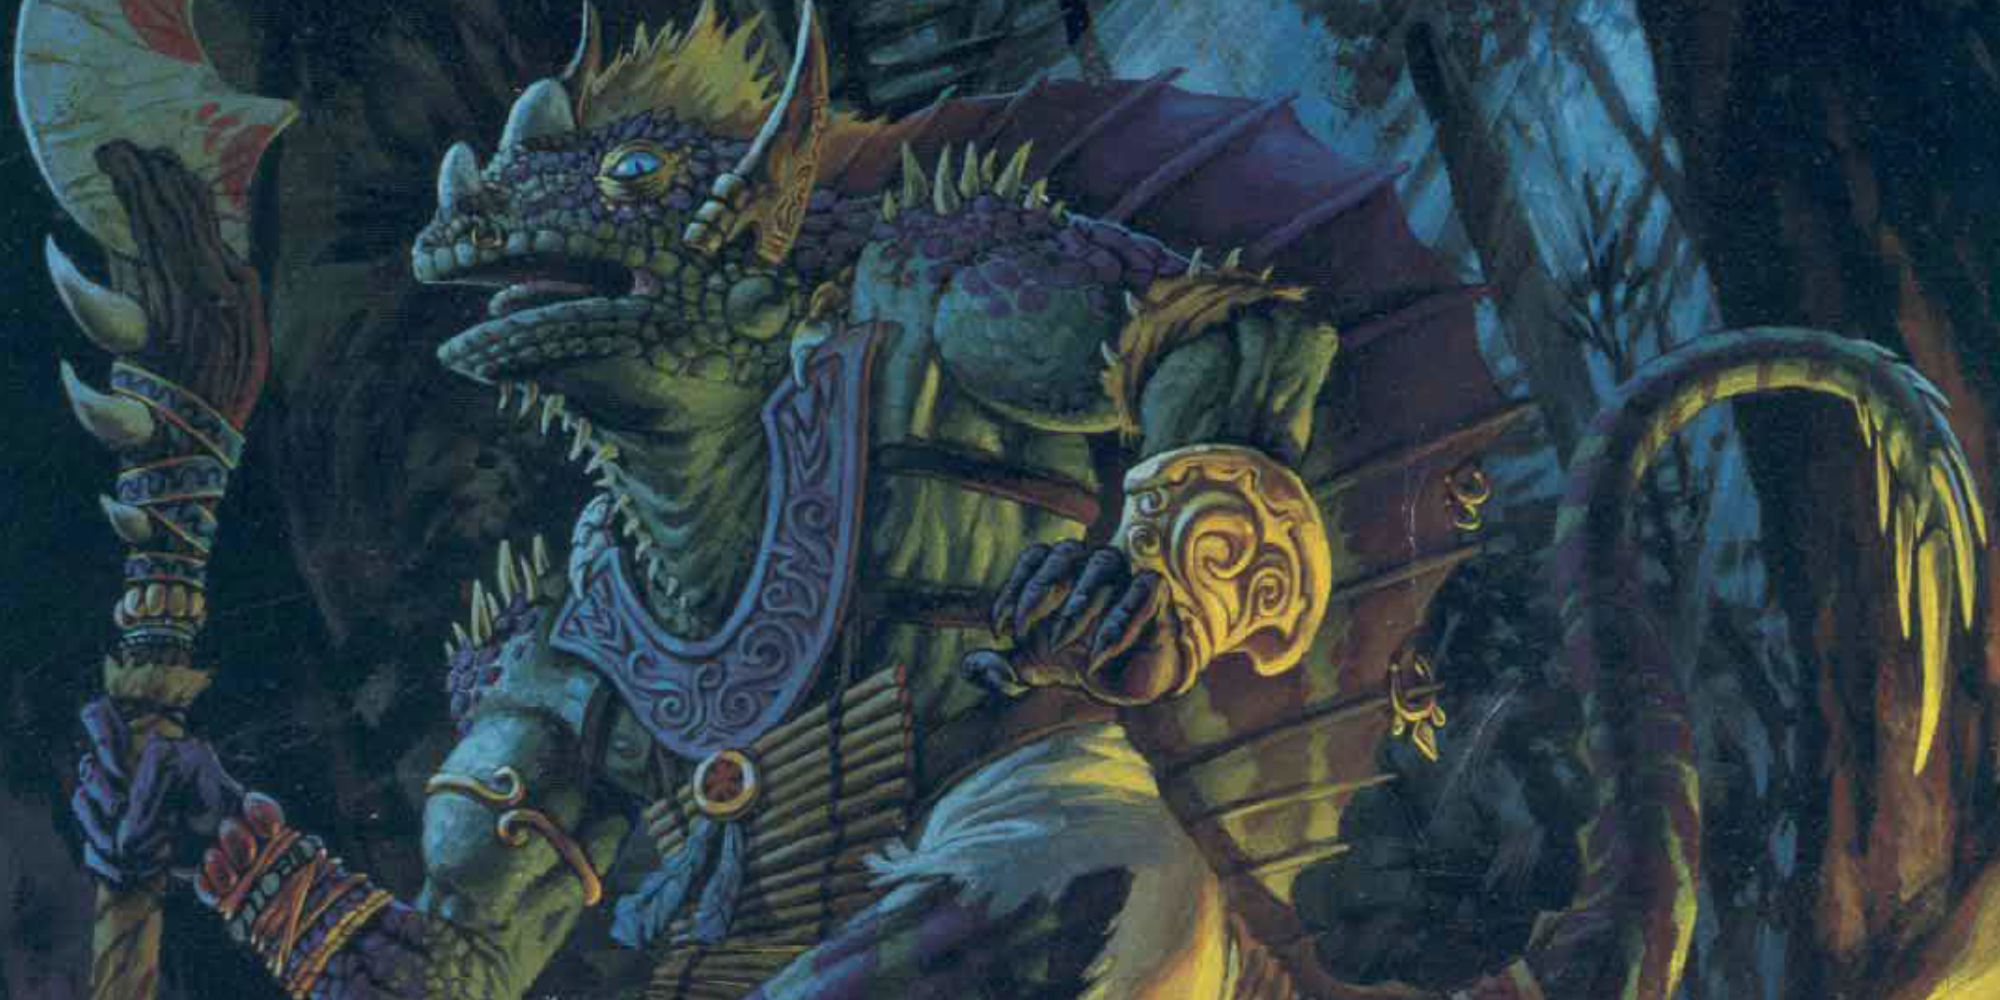 A lizard creature wielding an axe in a Dungeons & Dragons Swamplight cover.